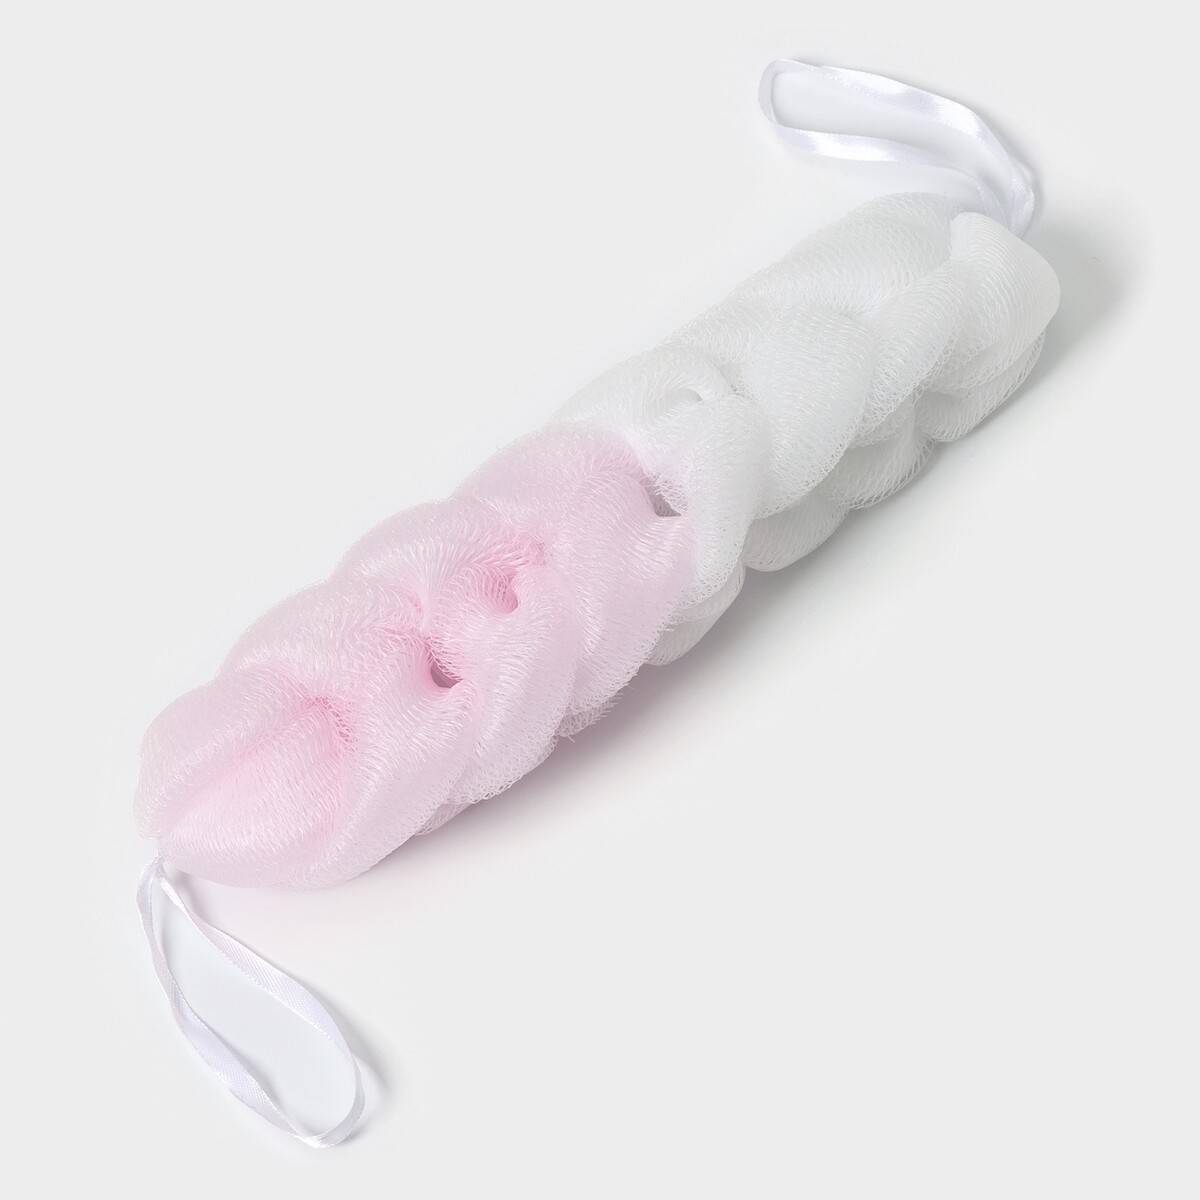 Мочалка - косичка для тела cupellia spa, 70 гр, цвет бело-розовый мочалка